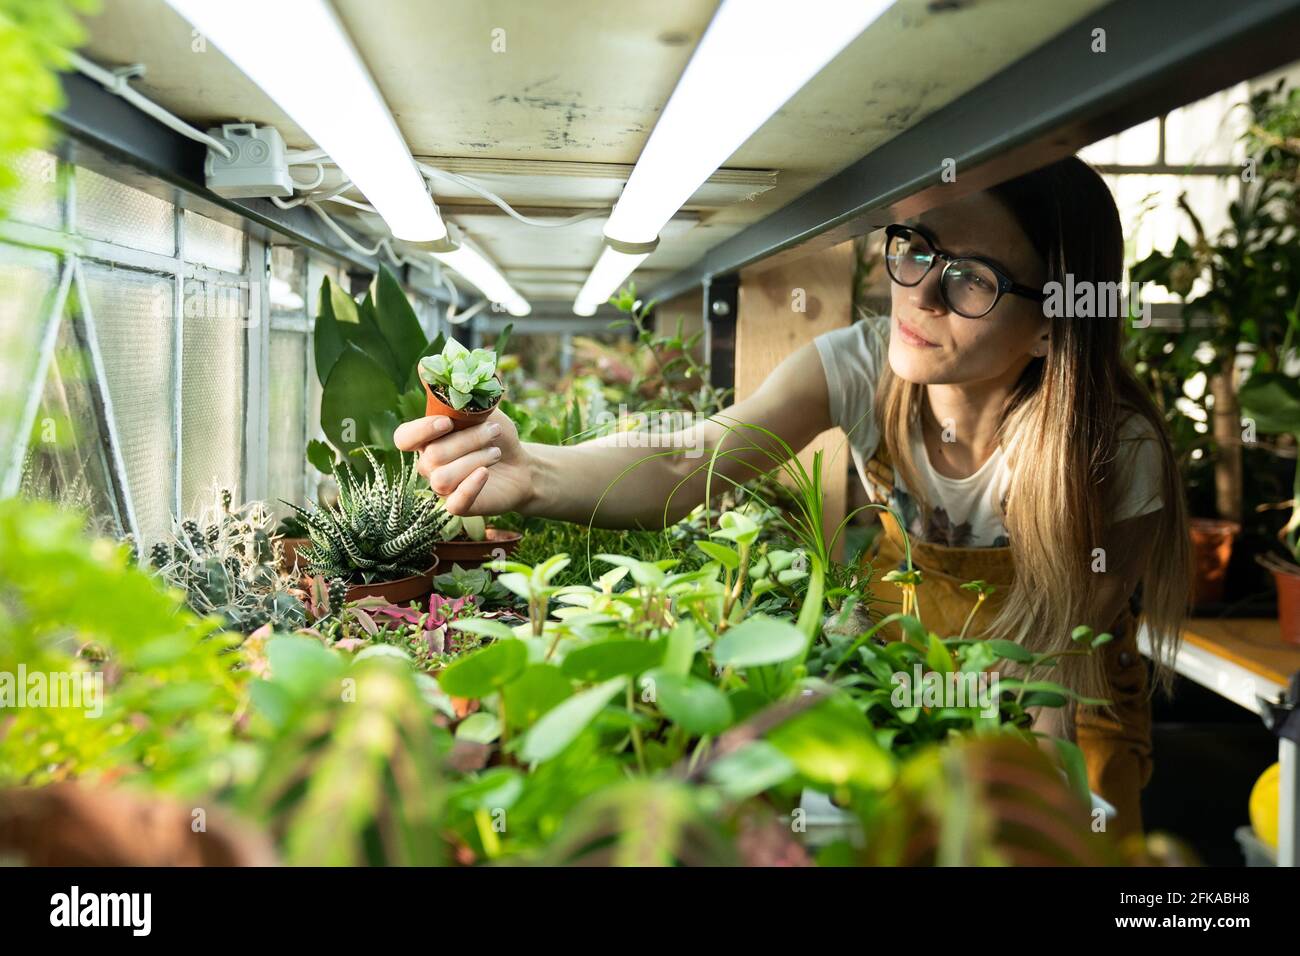 Houseplants for selling business. Female gardener florist work with flower seedling in plant nursery Stock Photo